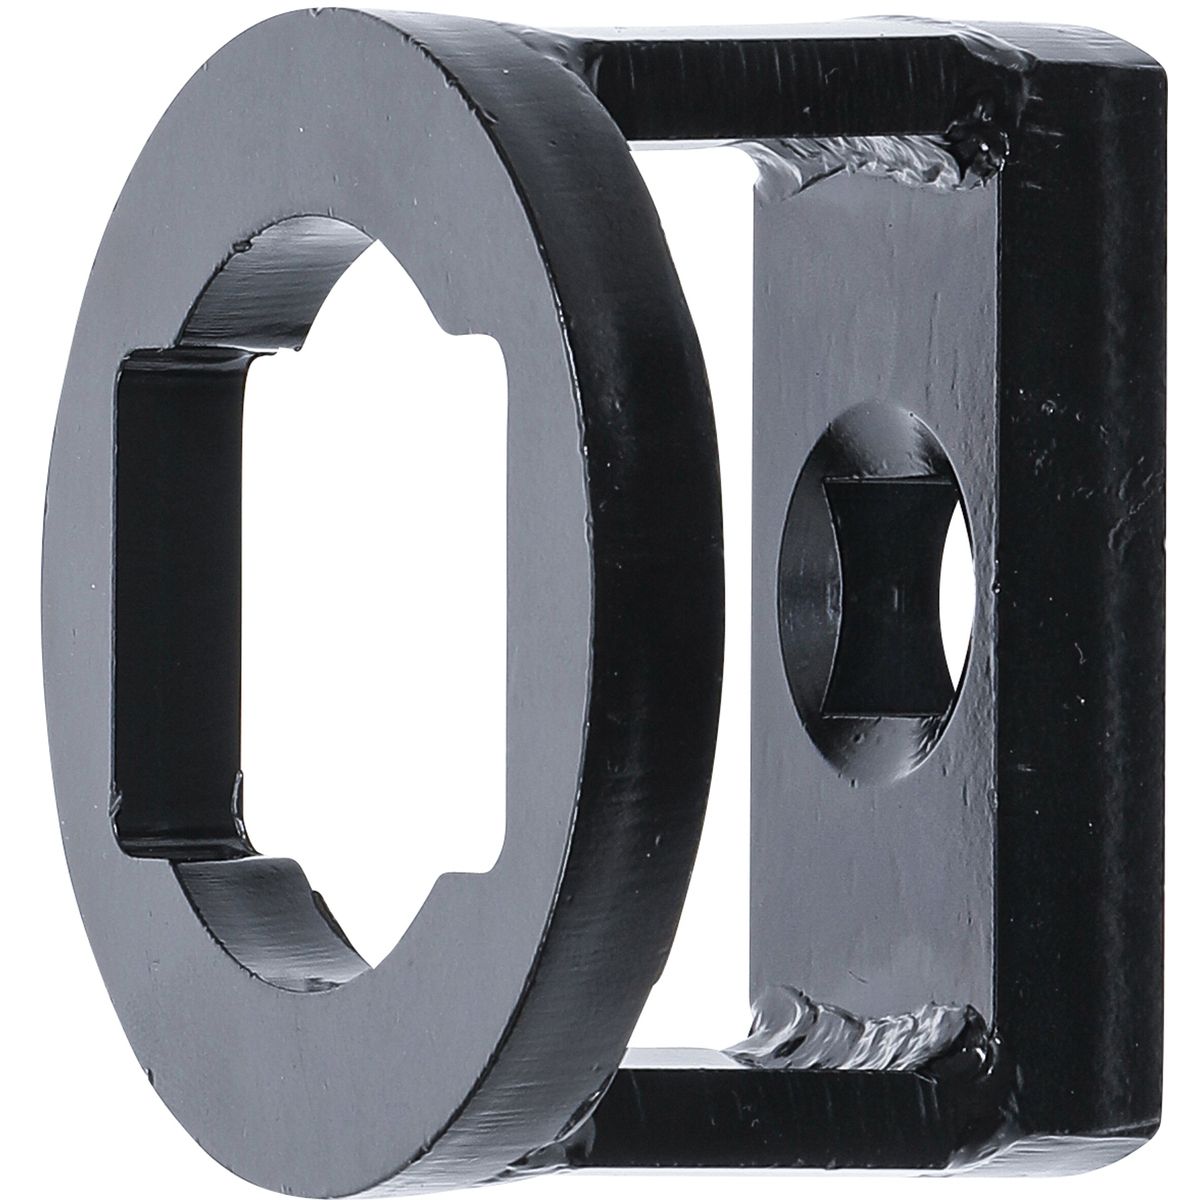 Axle Nut / Wheel Capsule Socket | for BPW axles | 65 mm